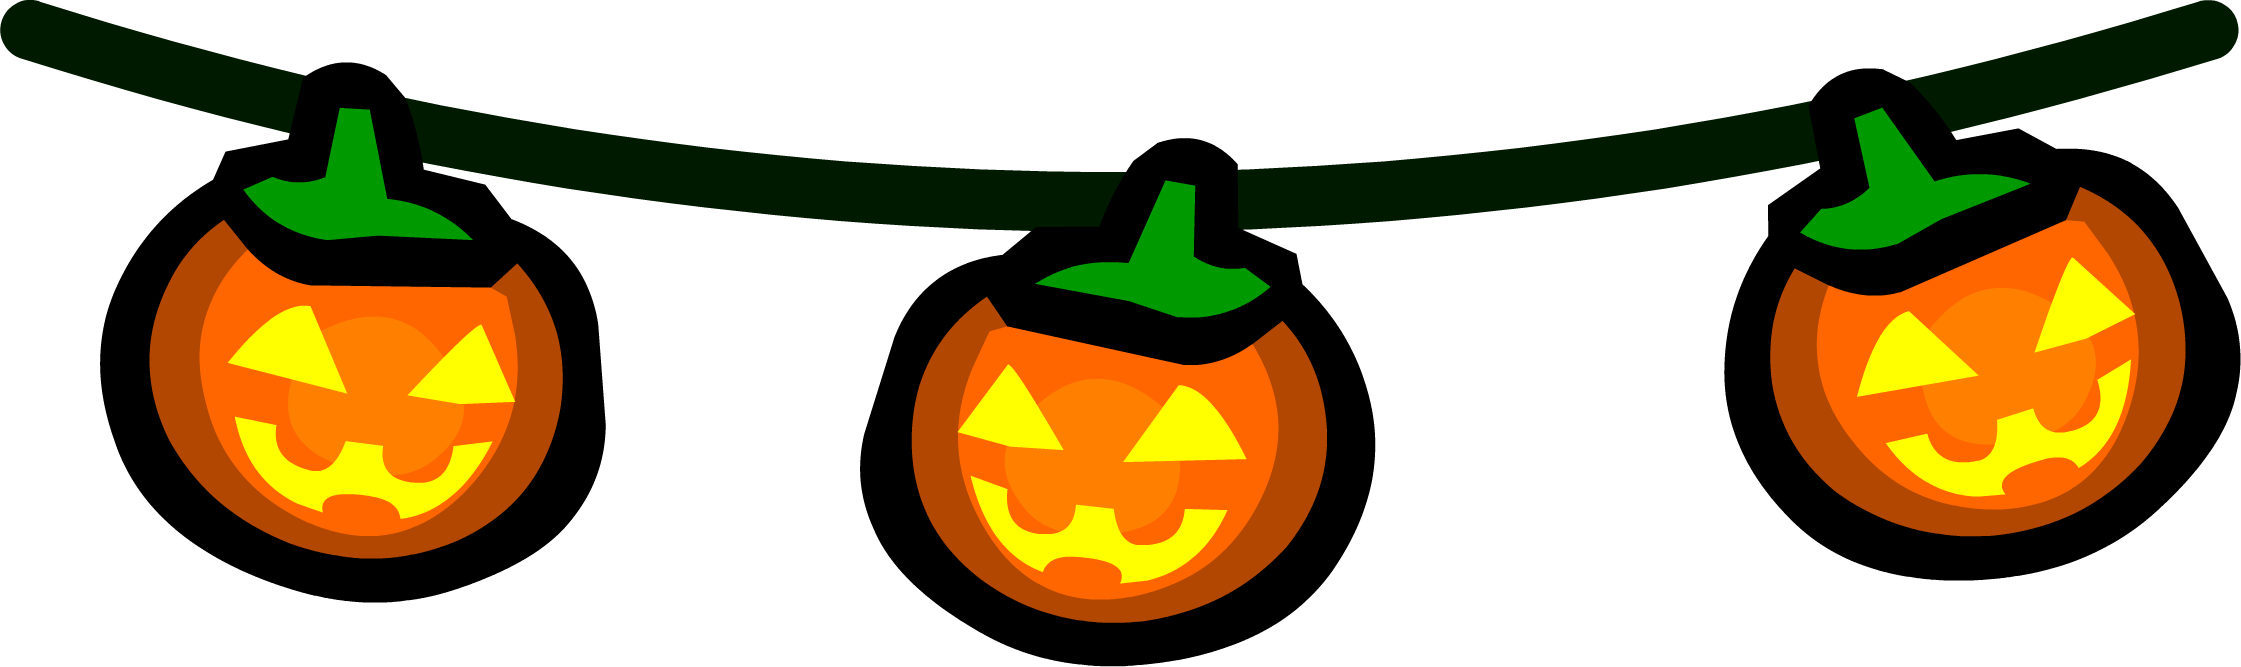 Halloween Lights Background PNG Image